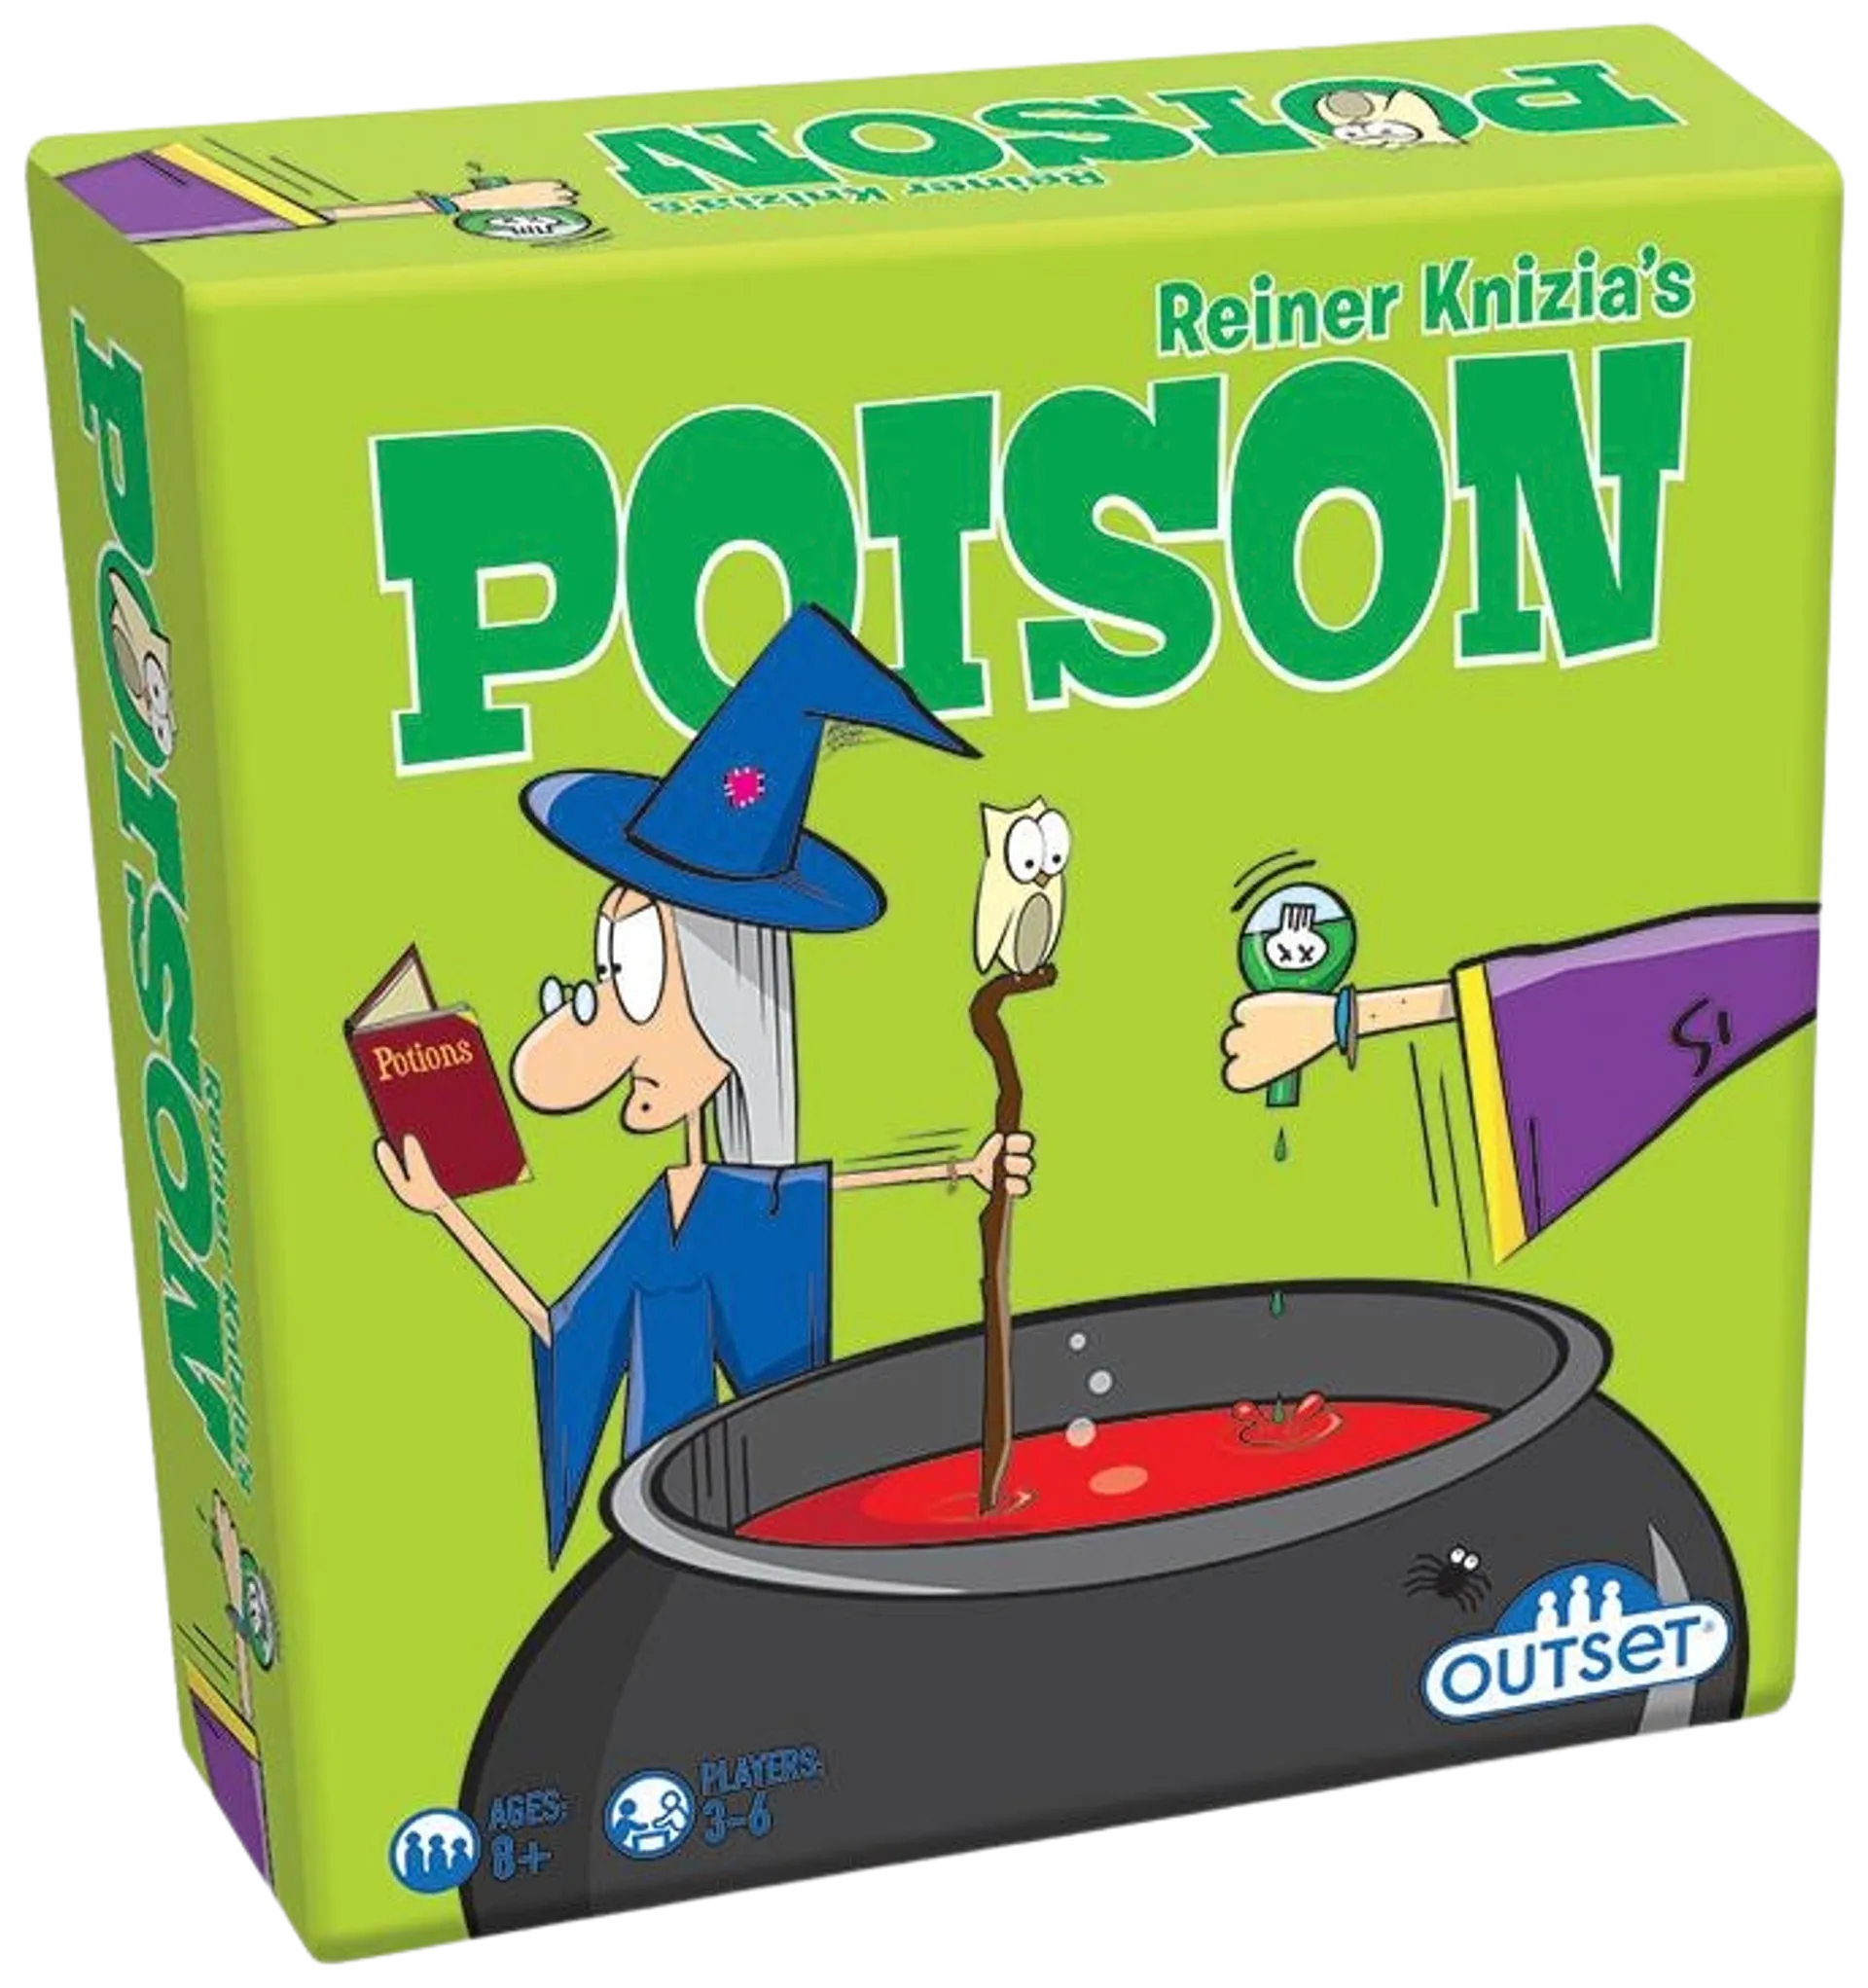 Poison peli - 1